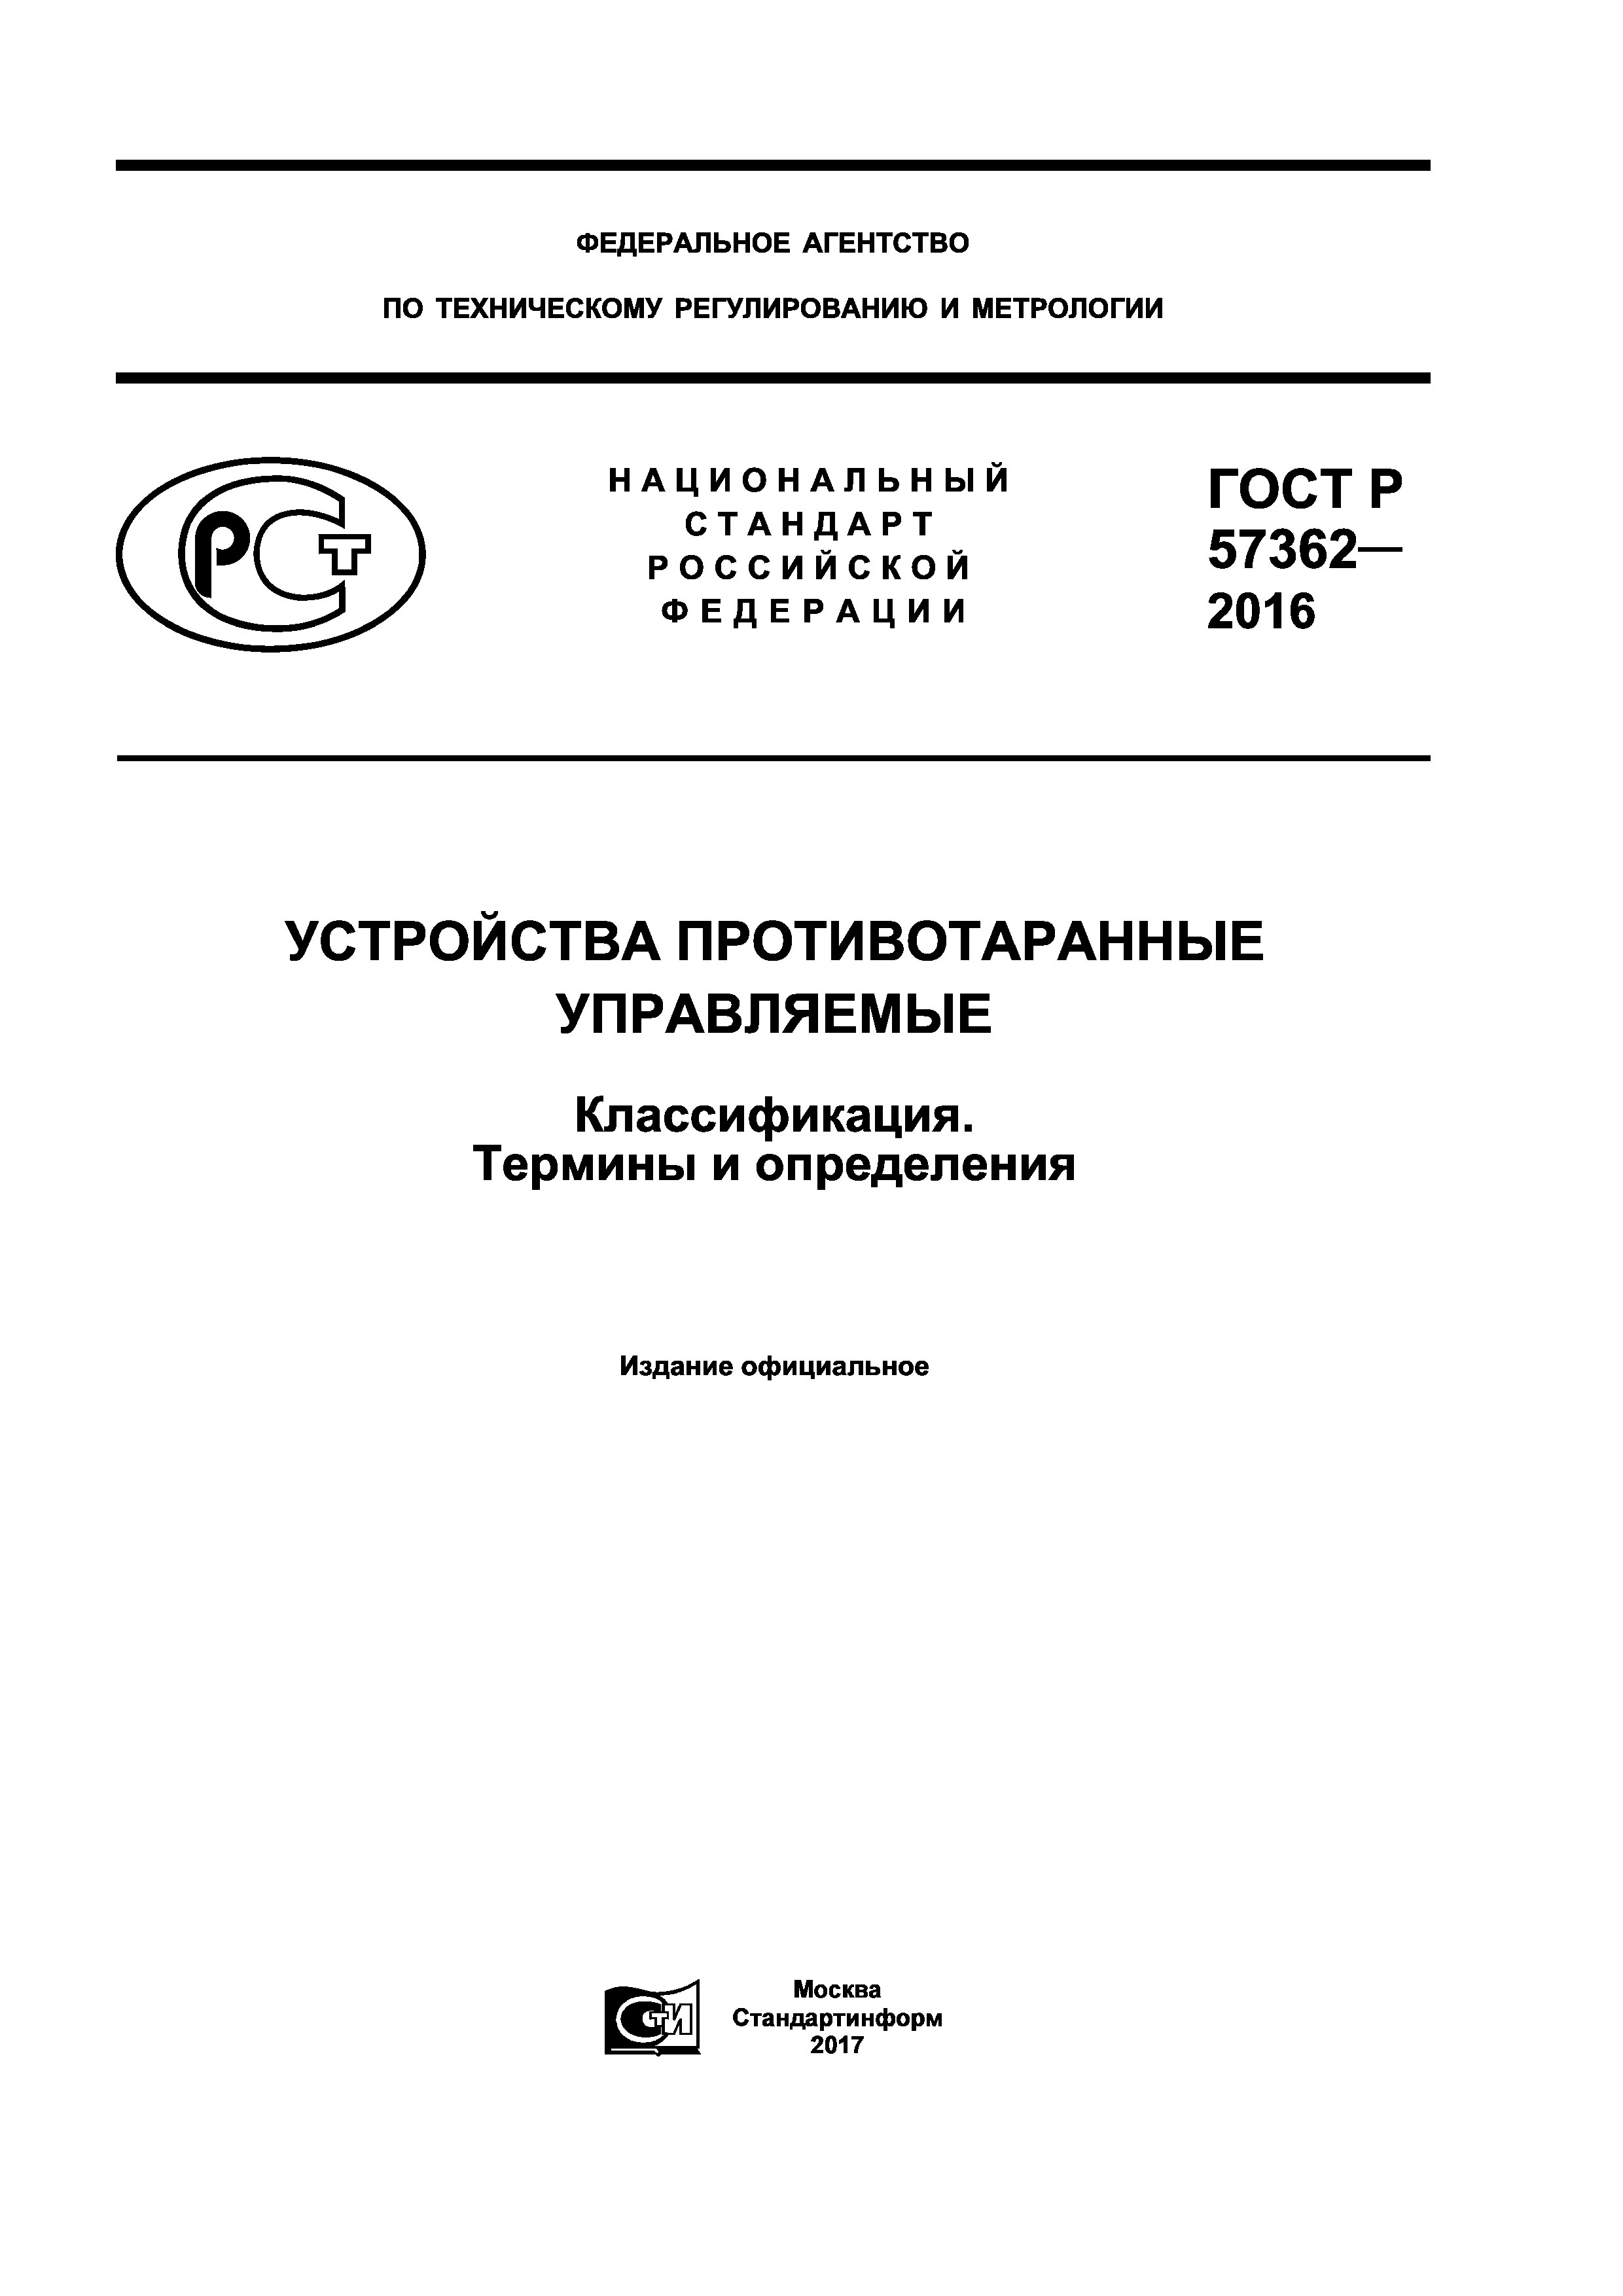 ГОСТ Р 57362-2016